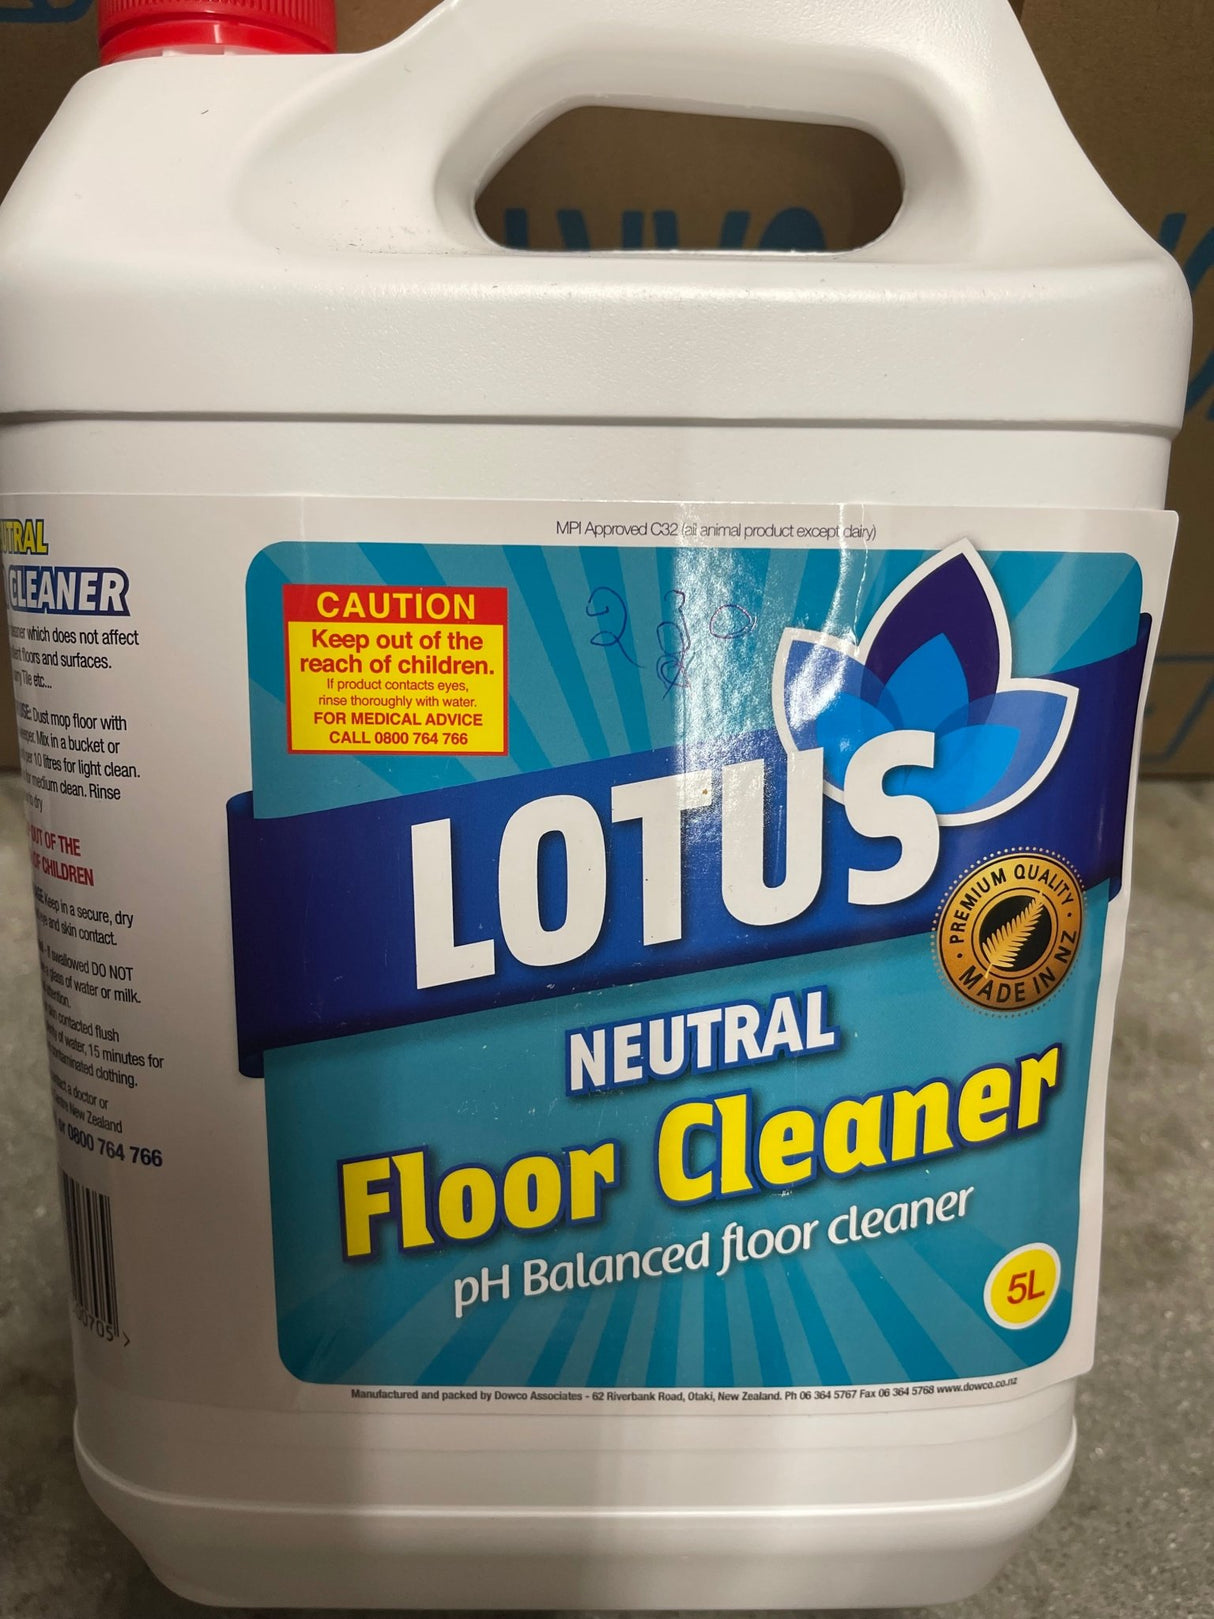 Lotus neutral floor cleaner 5ltr - Cafe Supply